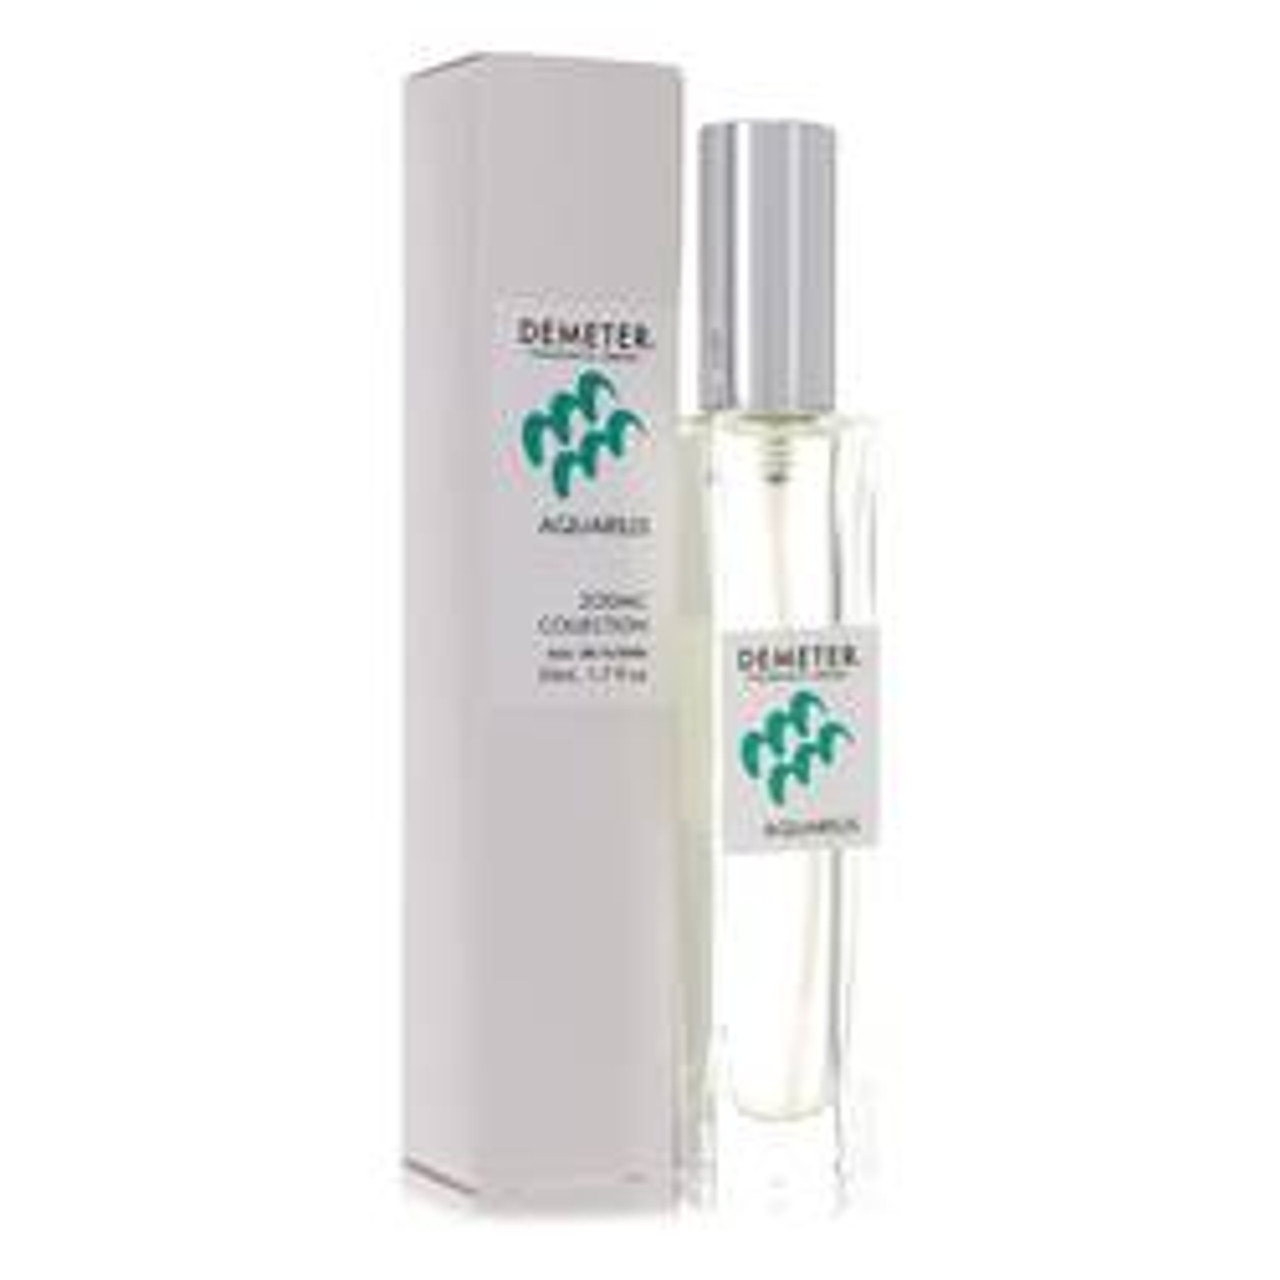 Demeter Aquarius Perfume By Demeter Eau De Toilette Spray (Unisex) 1.7 oz for Women - [From 63.00 - Choose pk Qty ] - *Ships from Miami